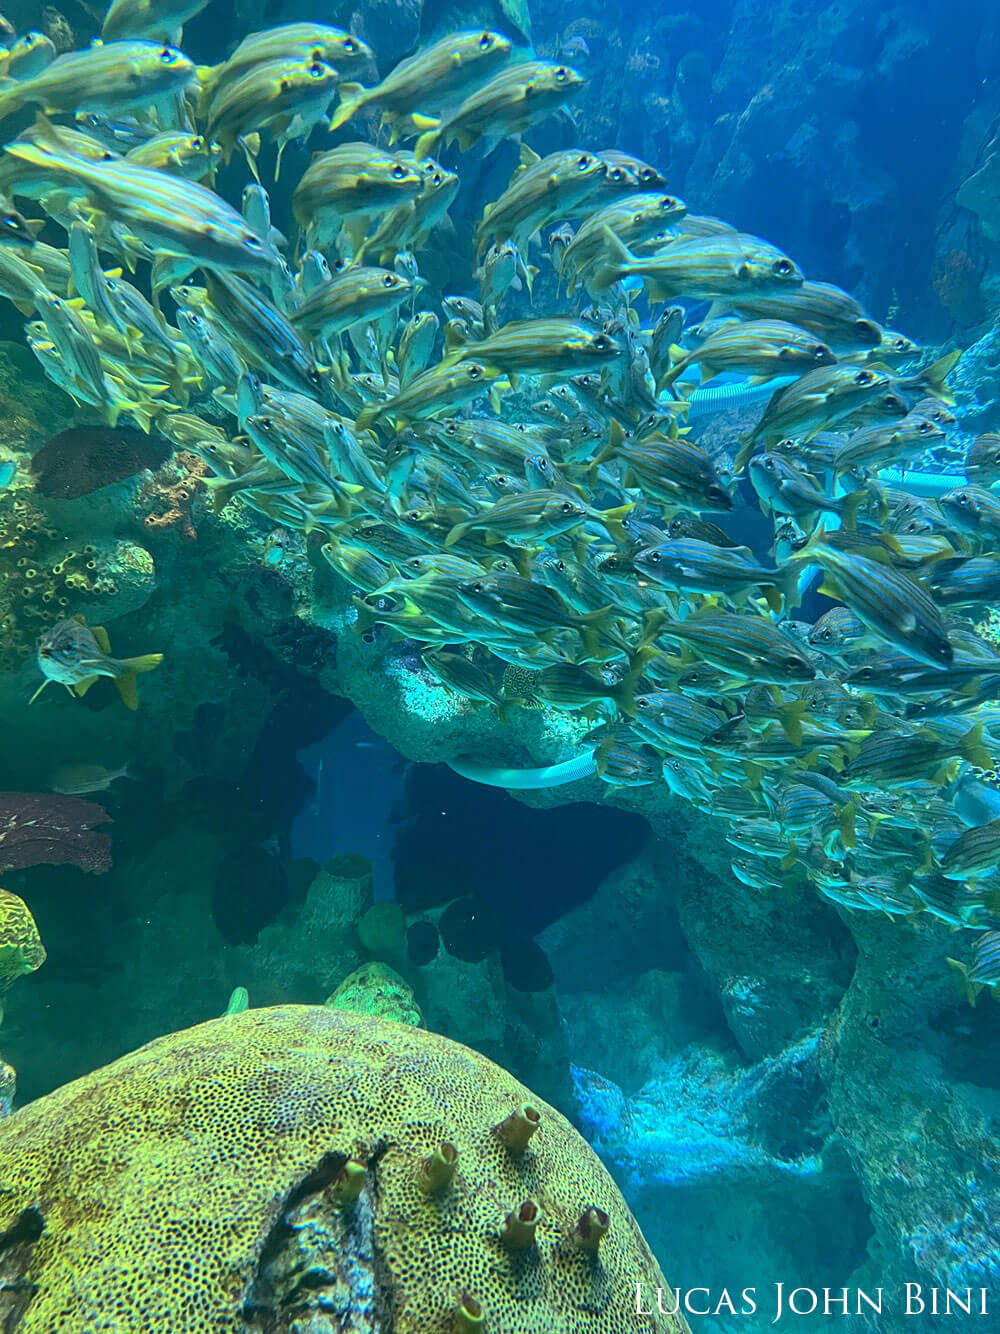 School of fish seen through glass at an aquarium.